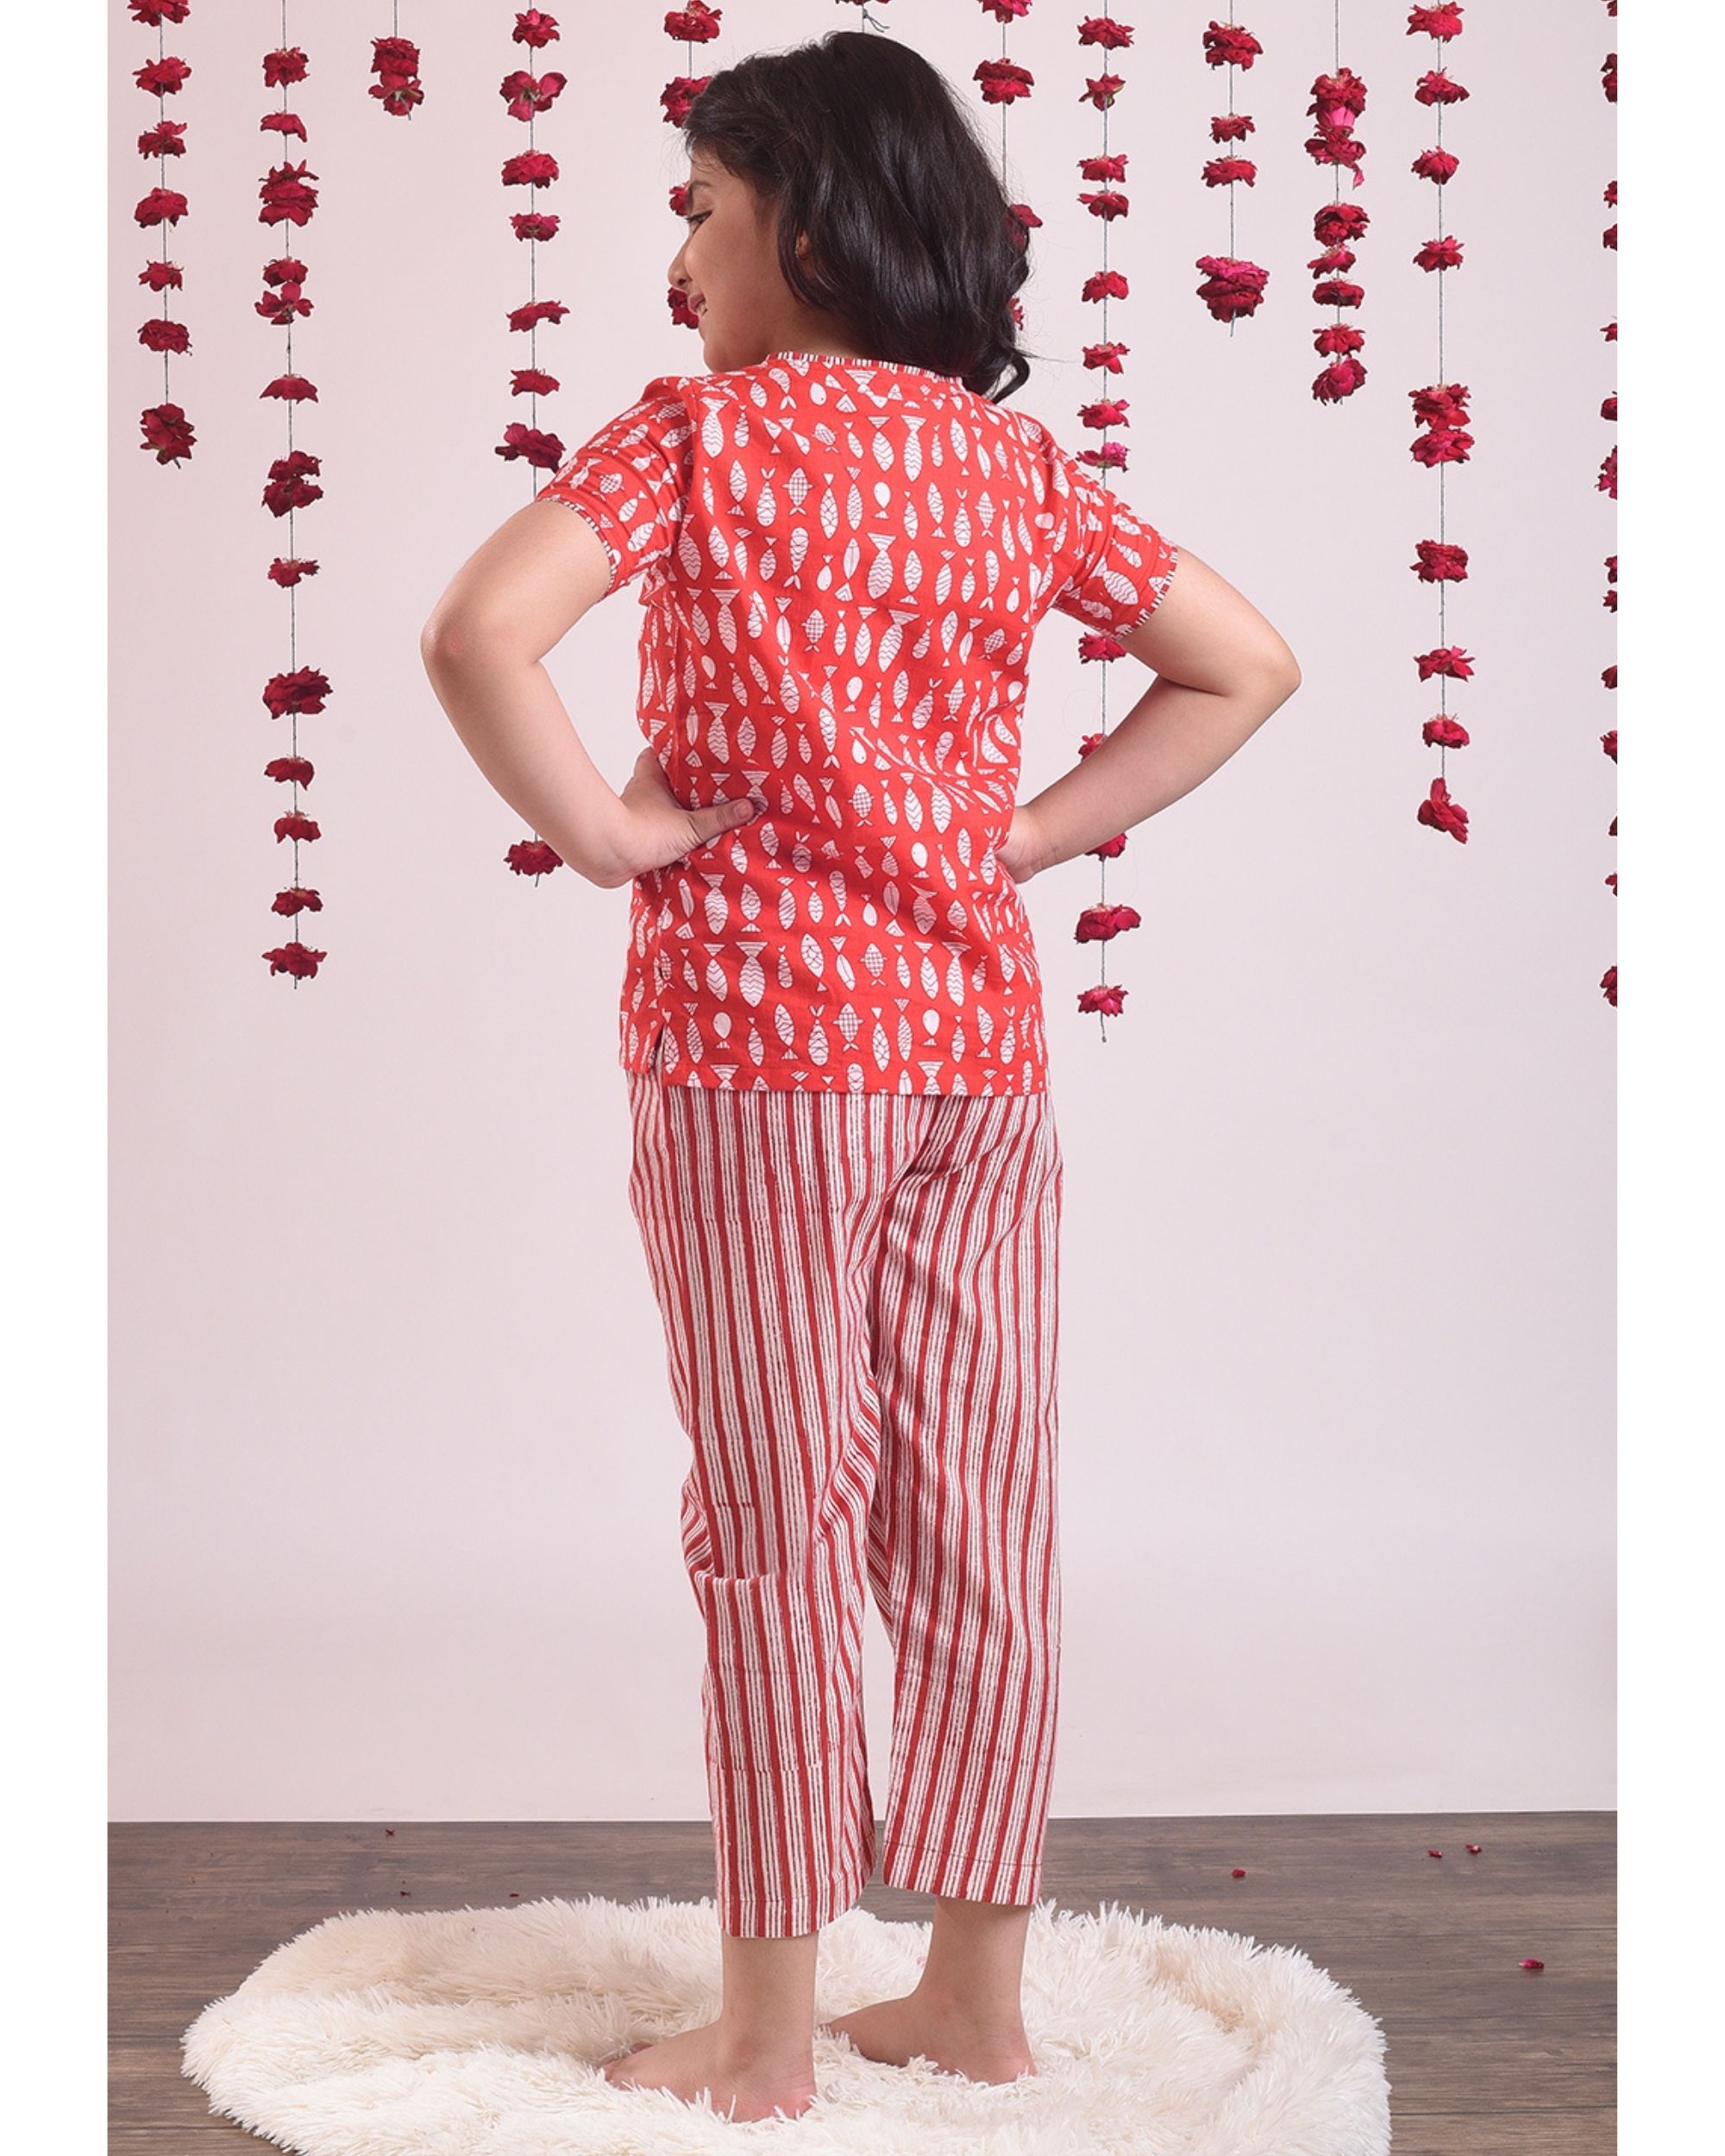 Buy luyk Red White Striped Paper Bag Pants for Kids Girls at Amazonin